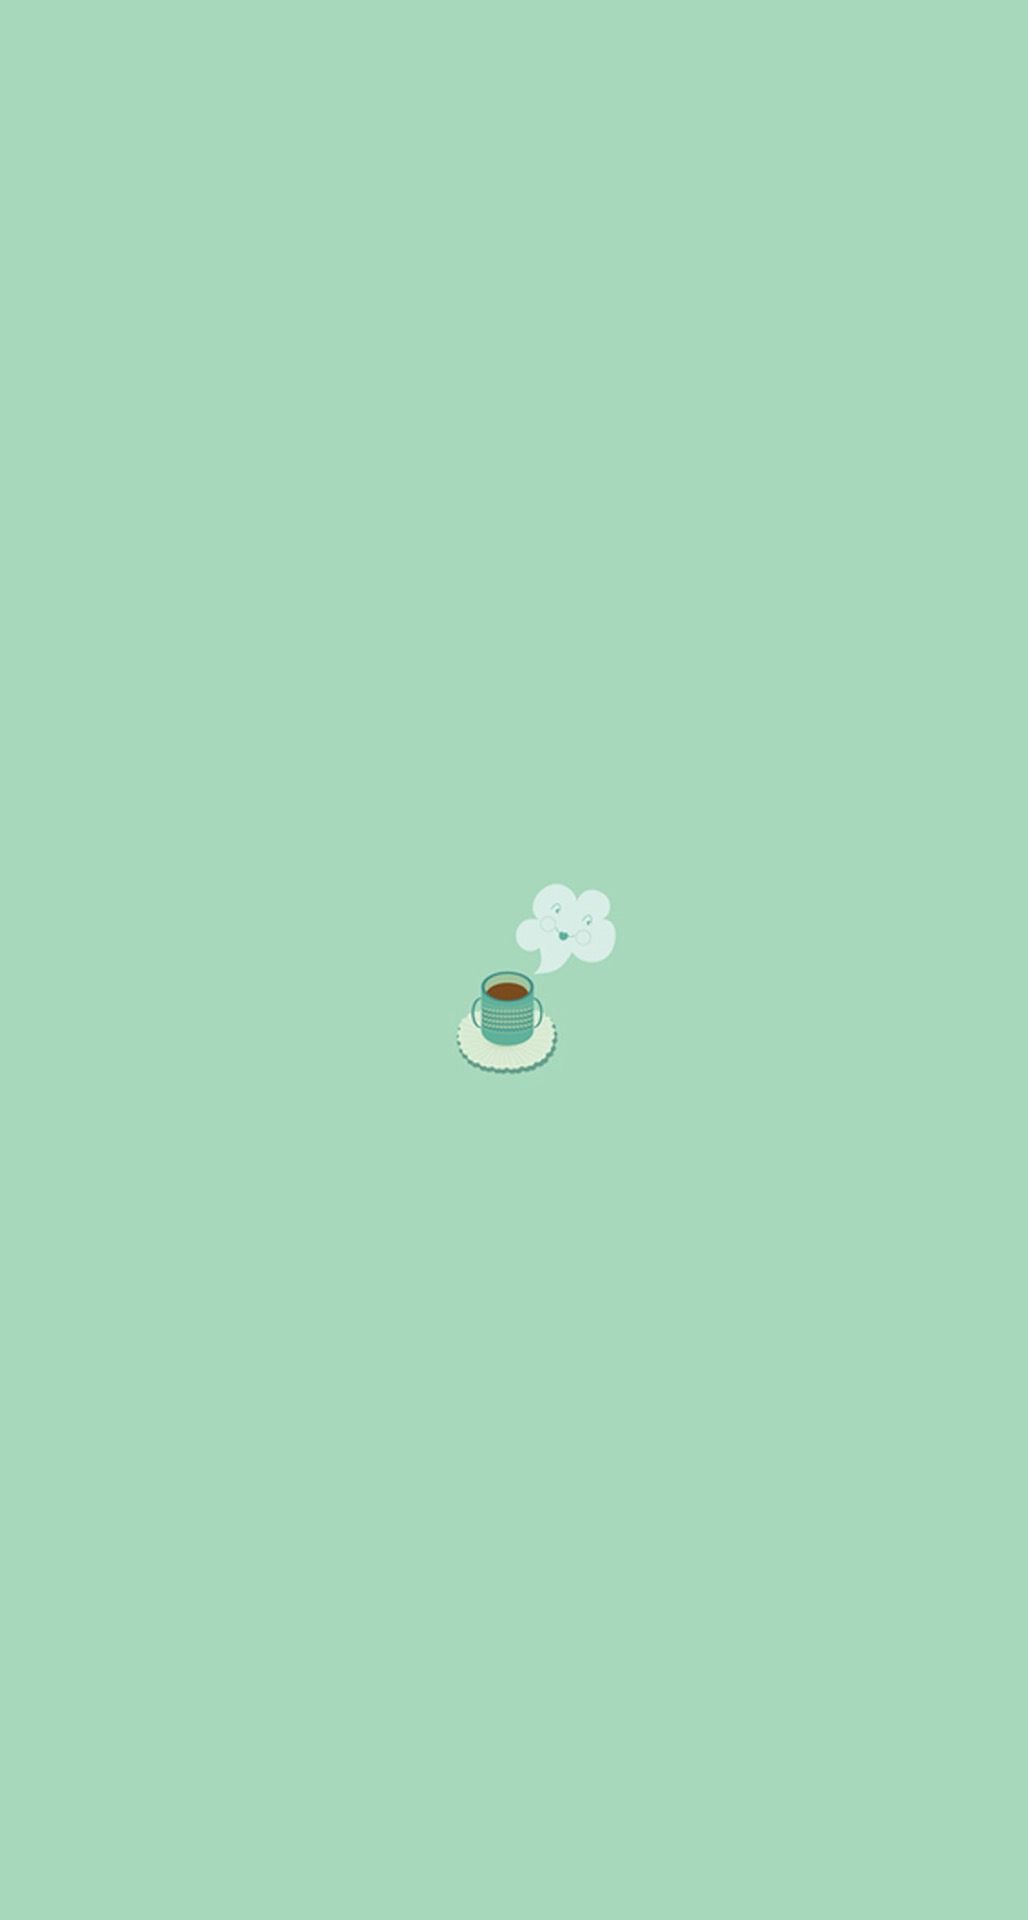 Simple Coffee Mug Flat Illustration iPhone 6 Plus HD Wallpaper